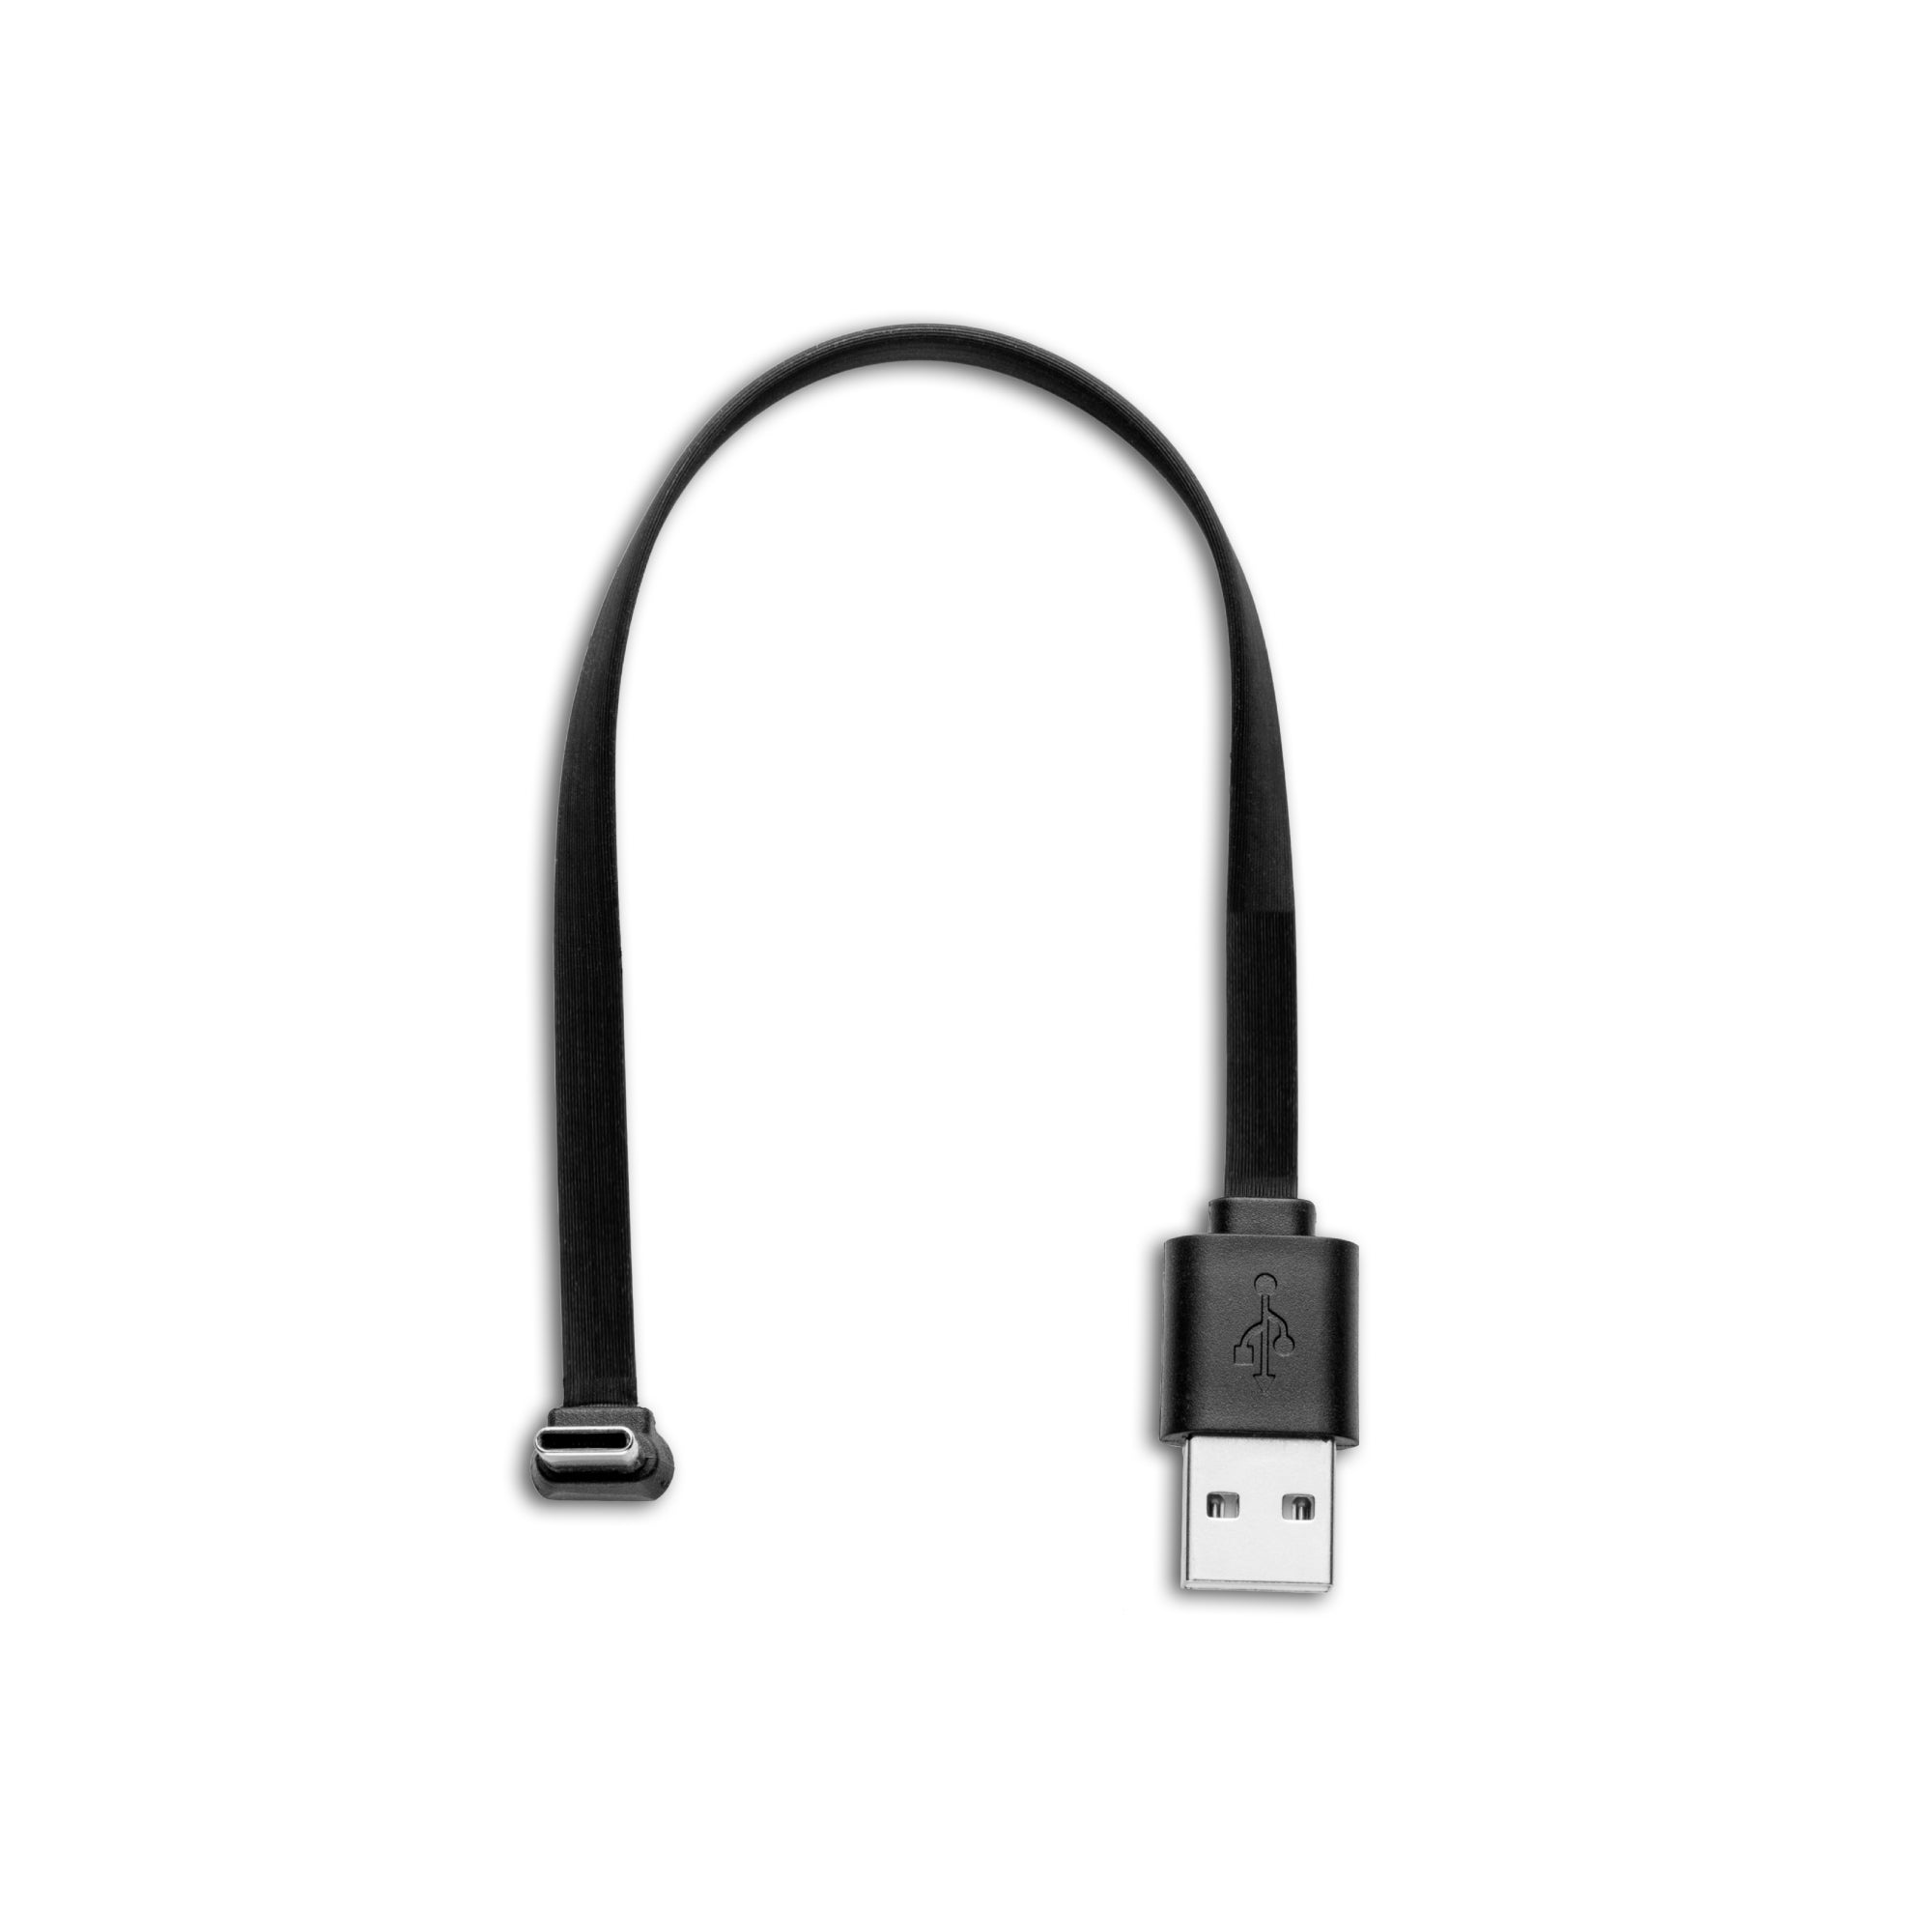 Displine USB-C auf USB-A Kabel